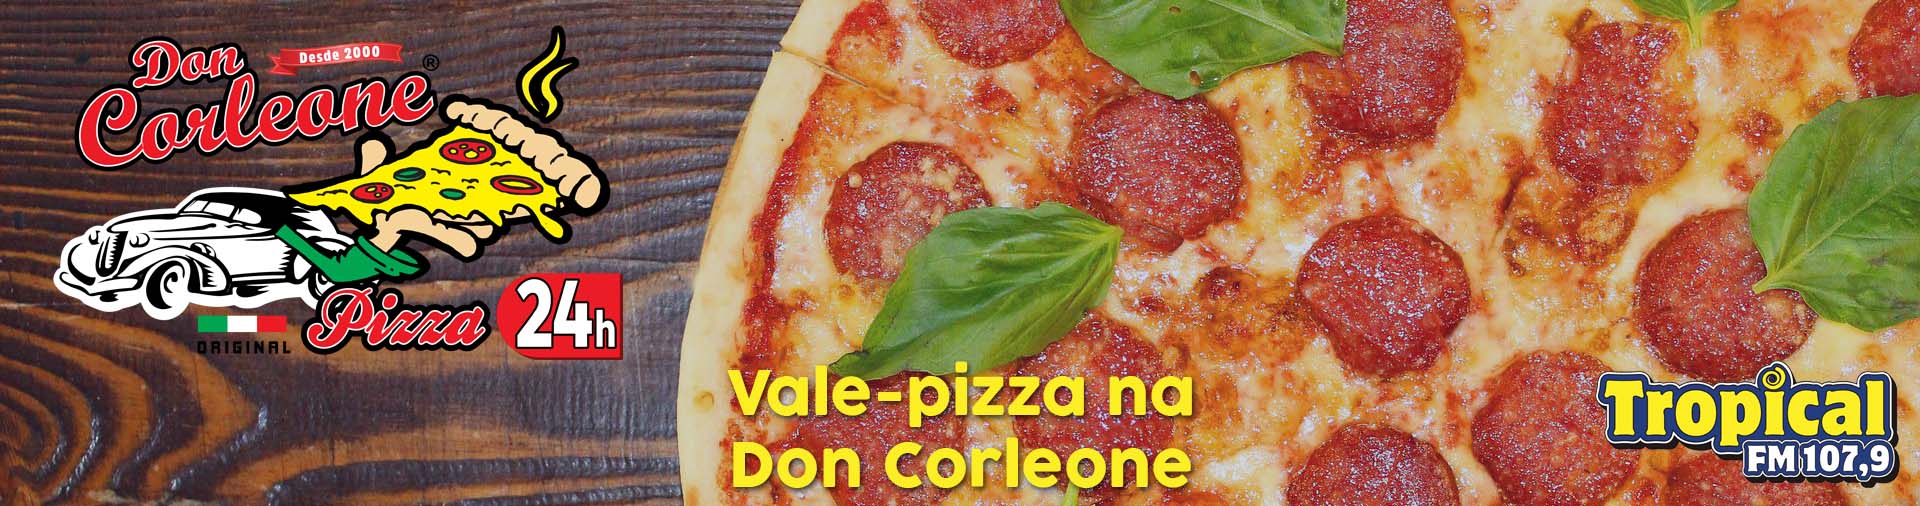 Banner Dois Vales-Pizza da Don Corleone